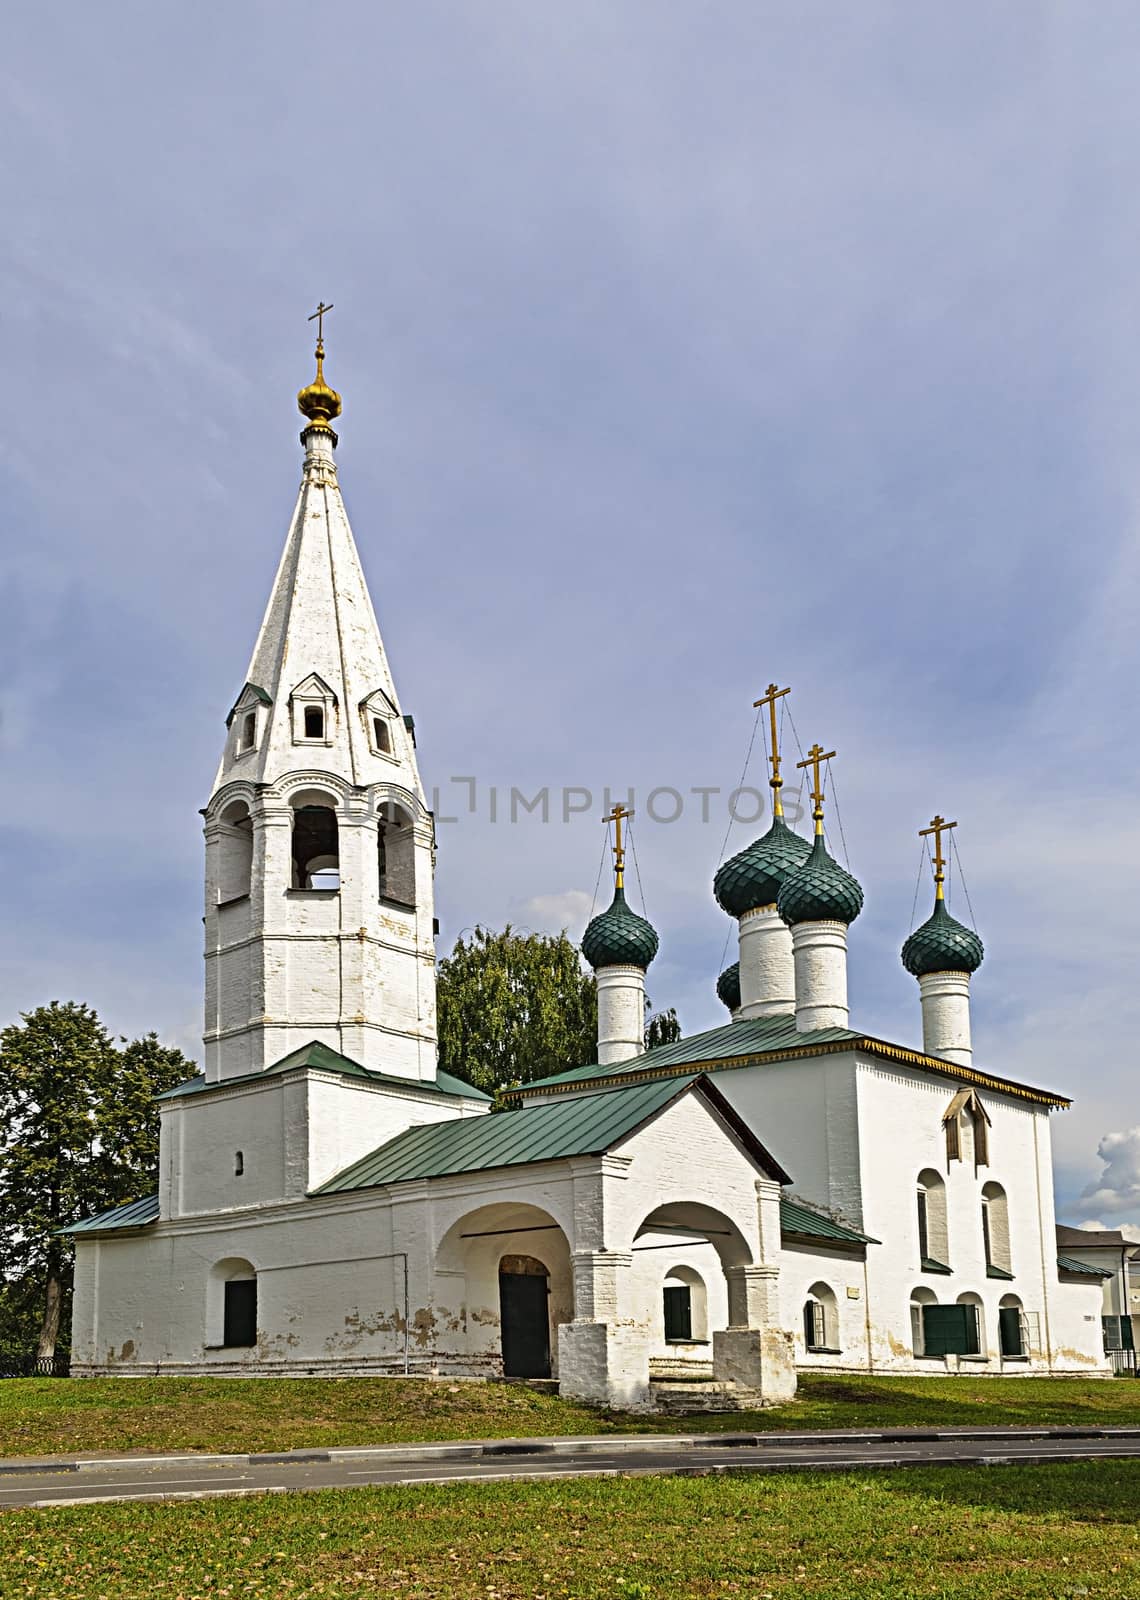 Church of St. Nicholas Chopped City (1695), Yaroslavl, Russia